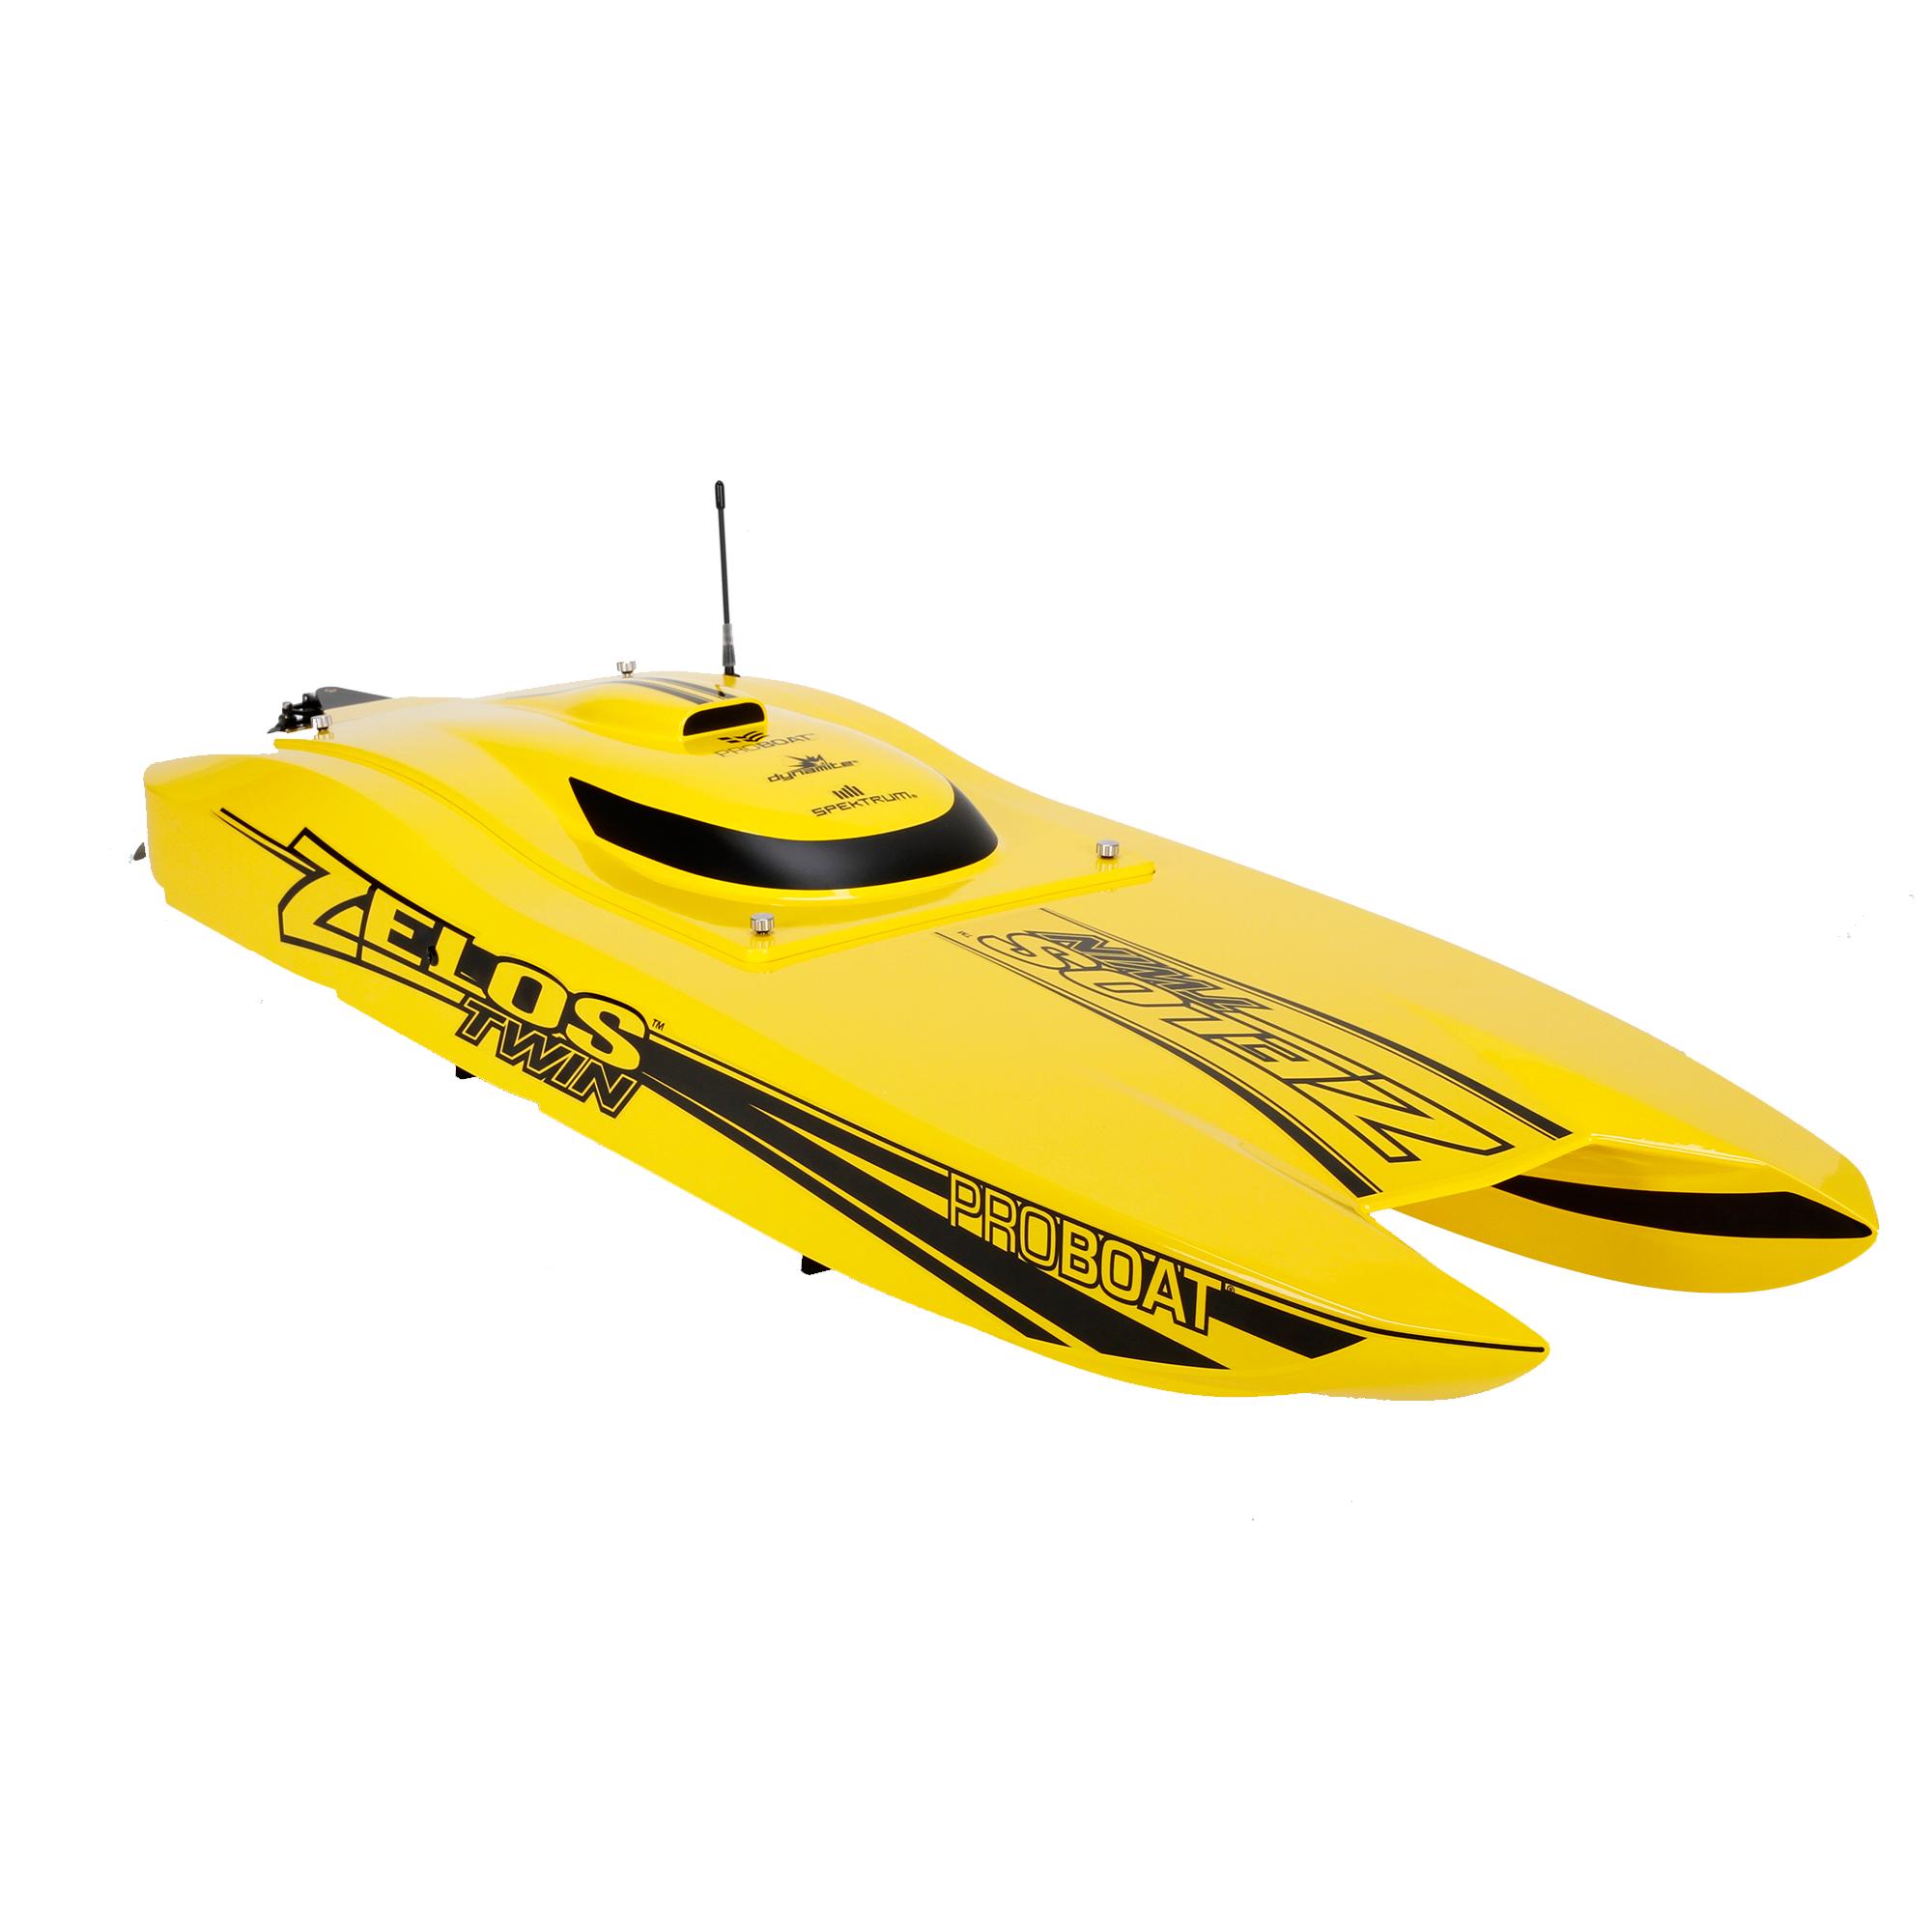 Zelos Boat: Zelos Boat Models and Features